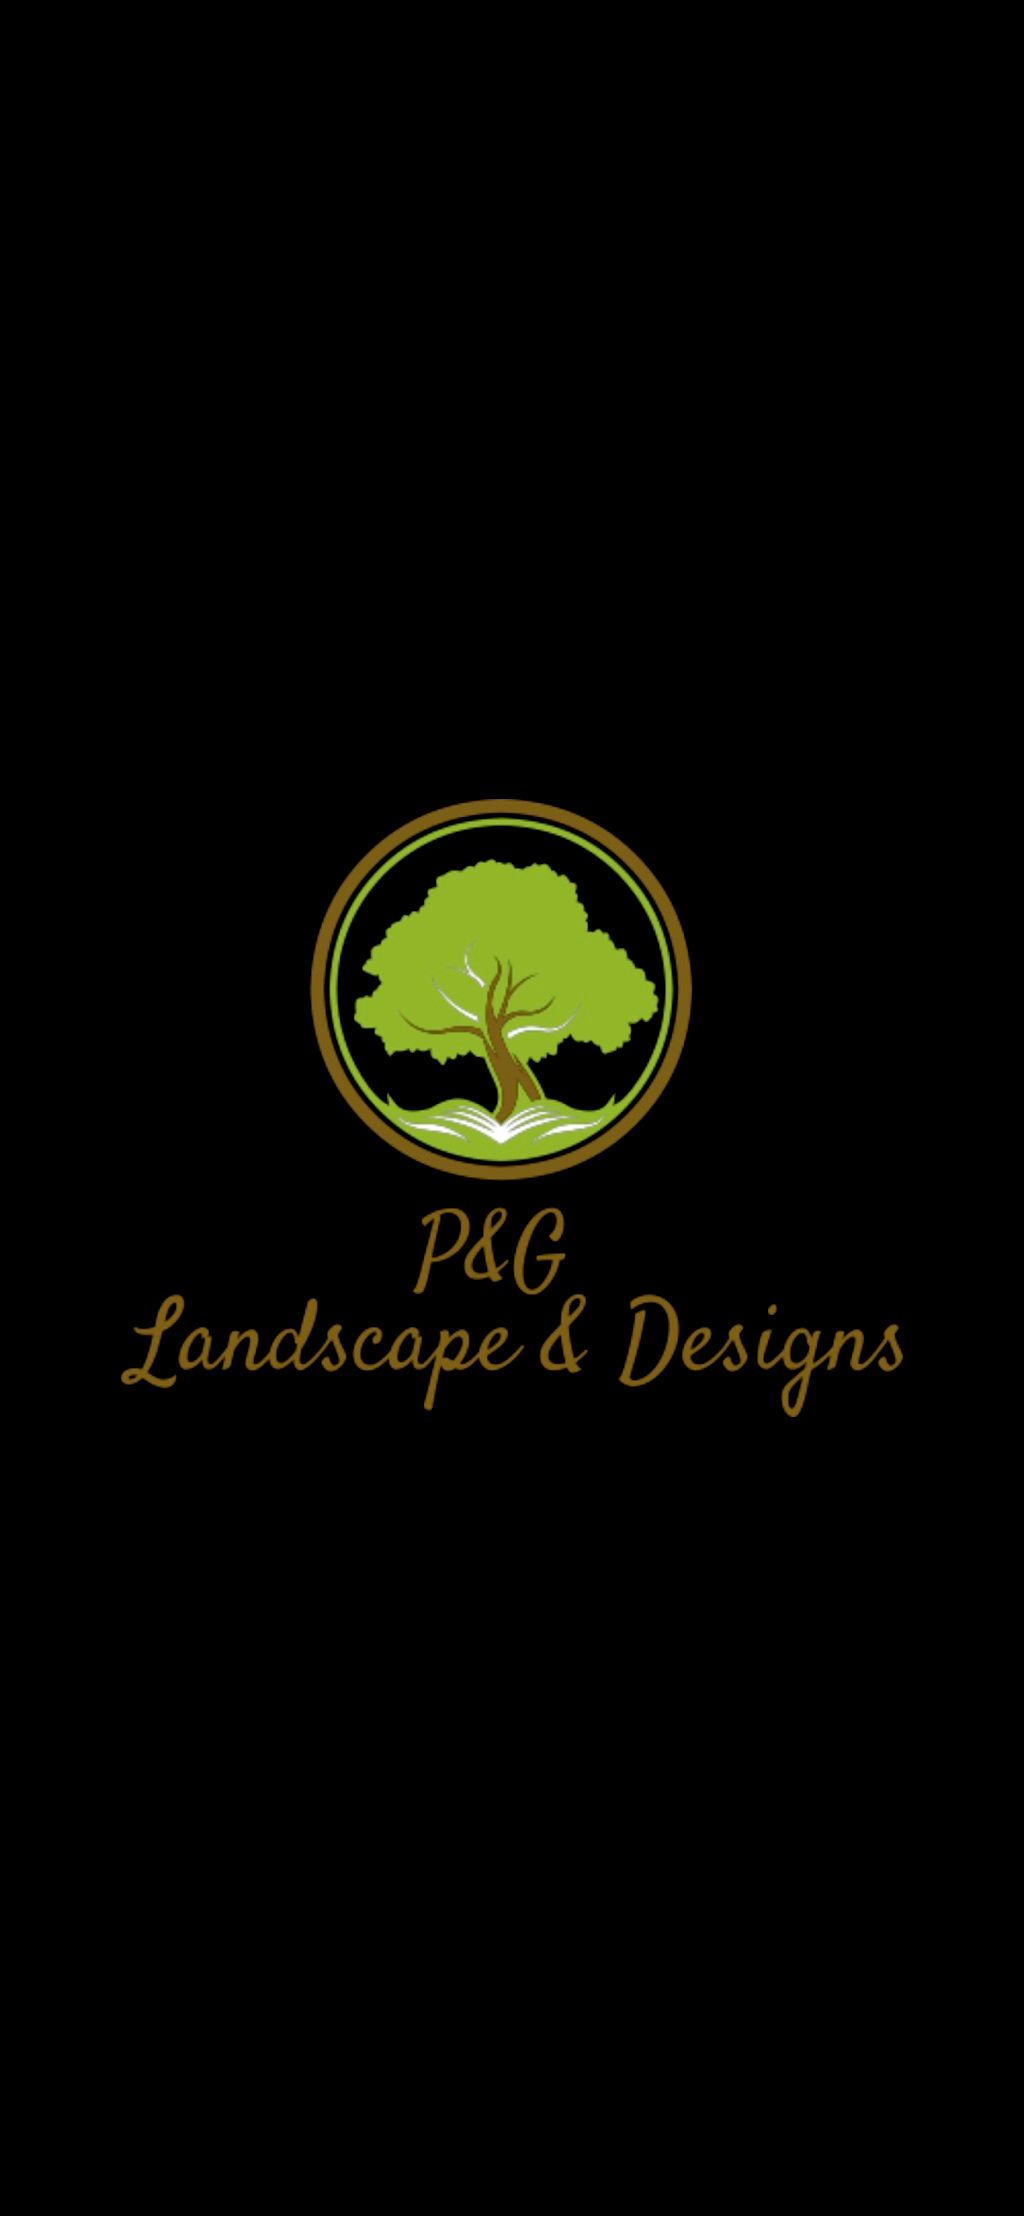 P&G landscaping design LLC